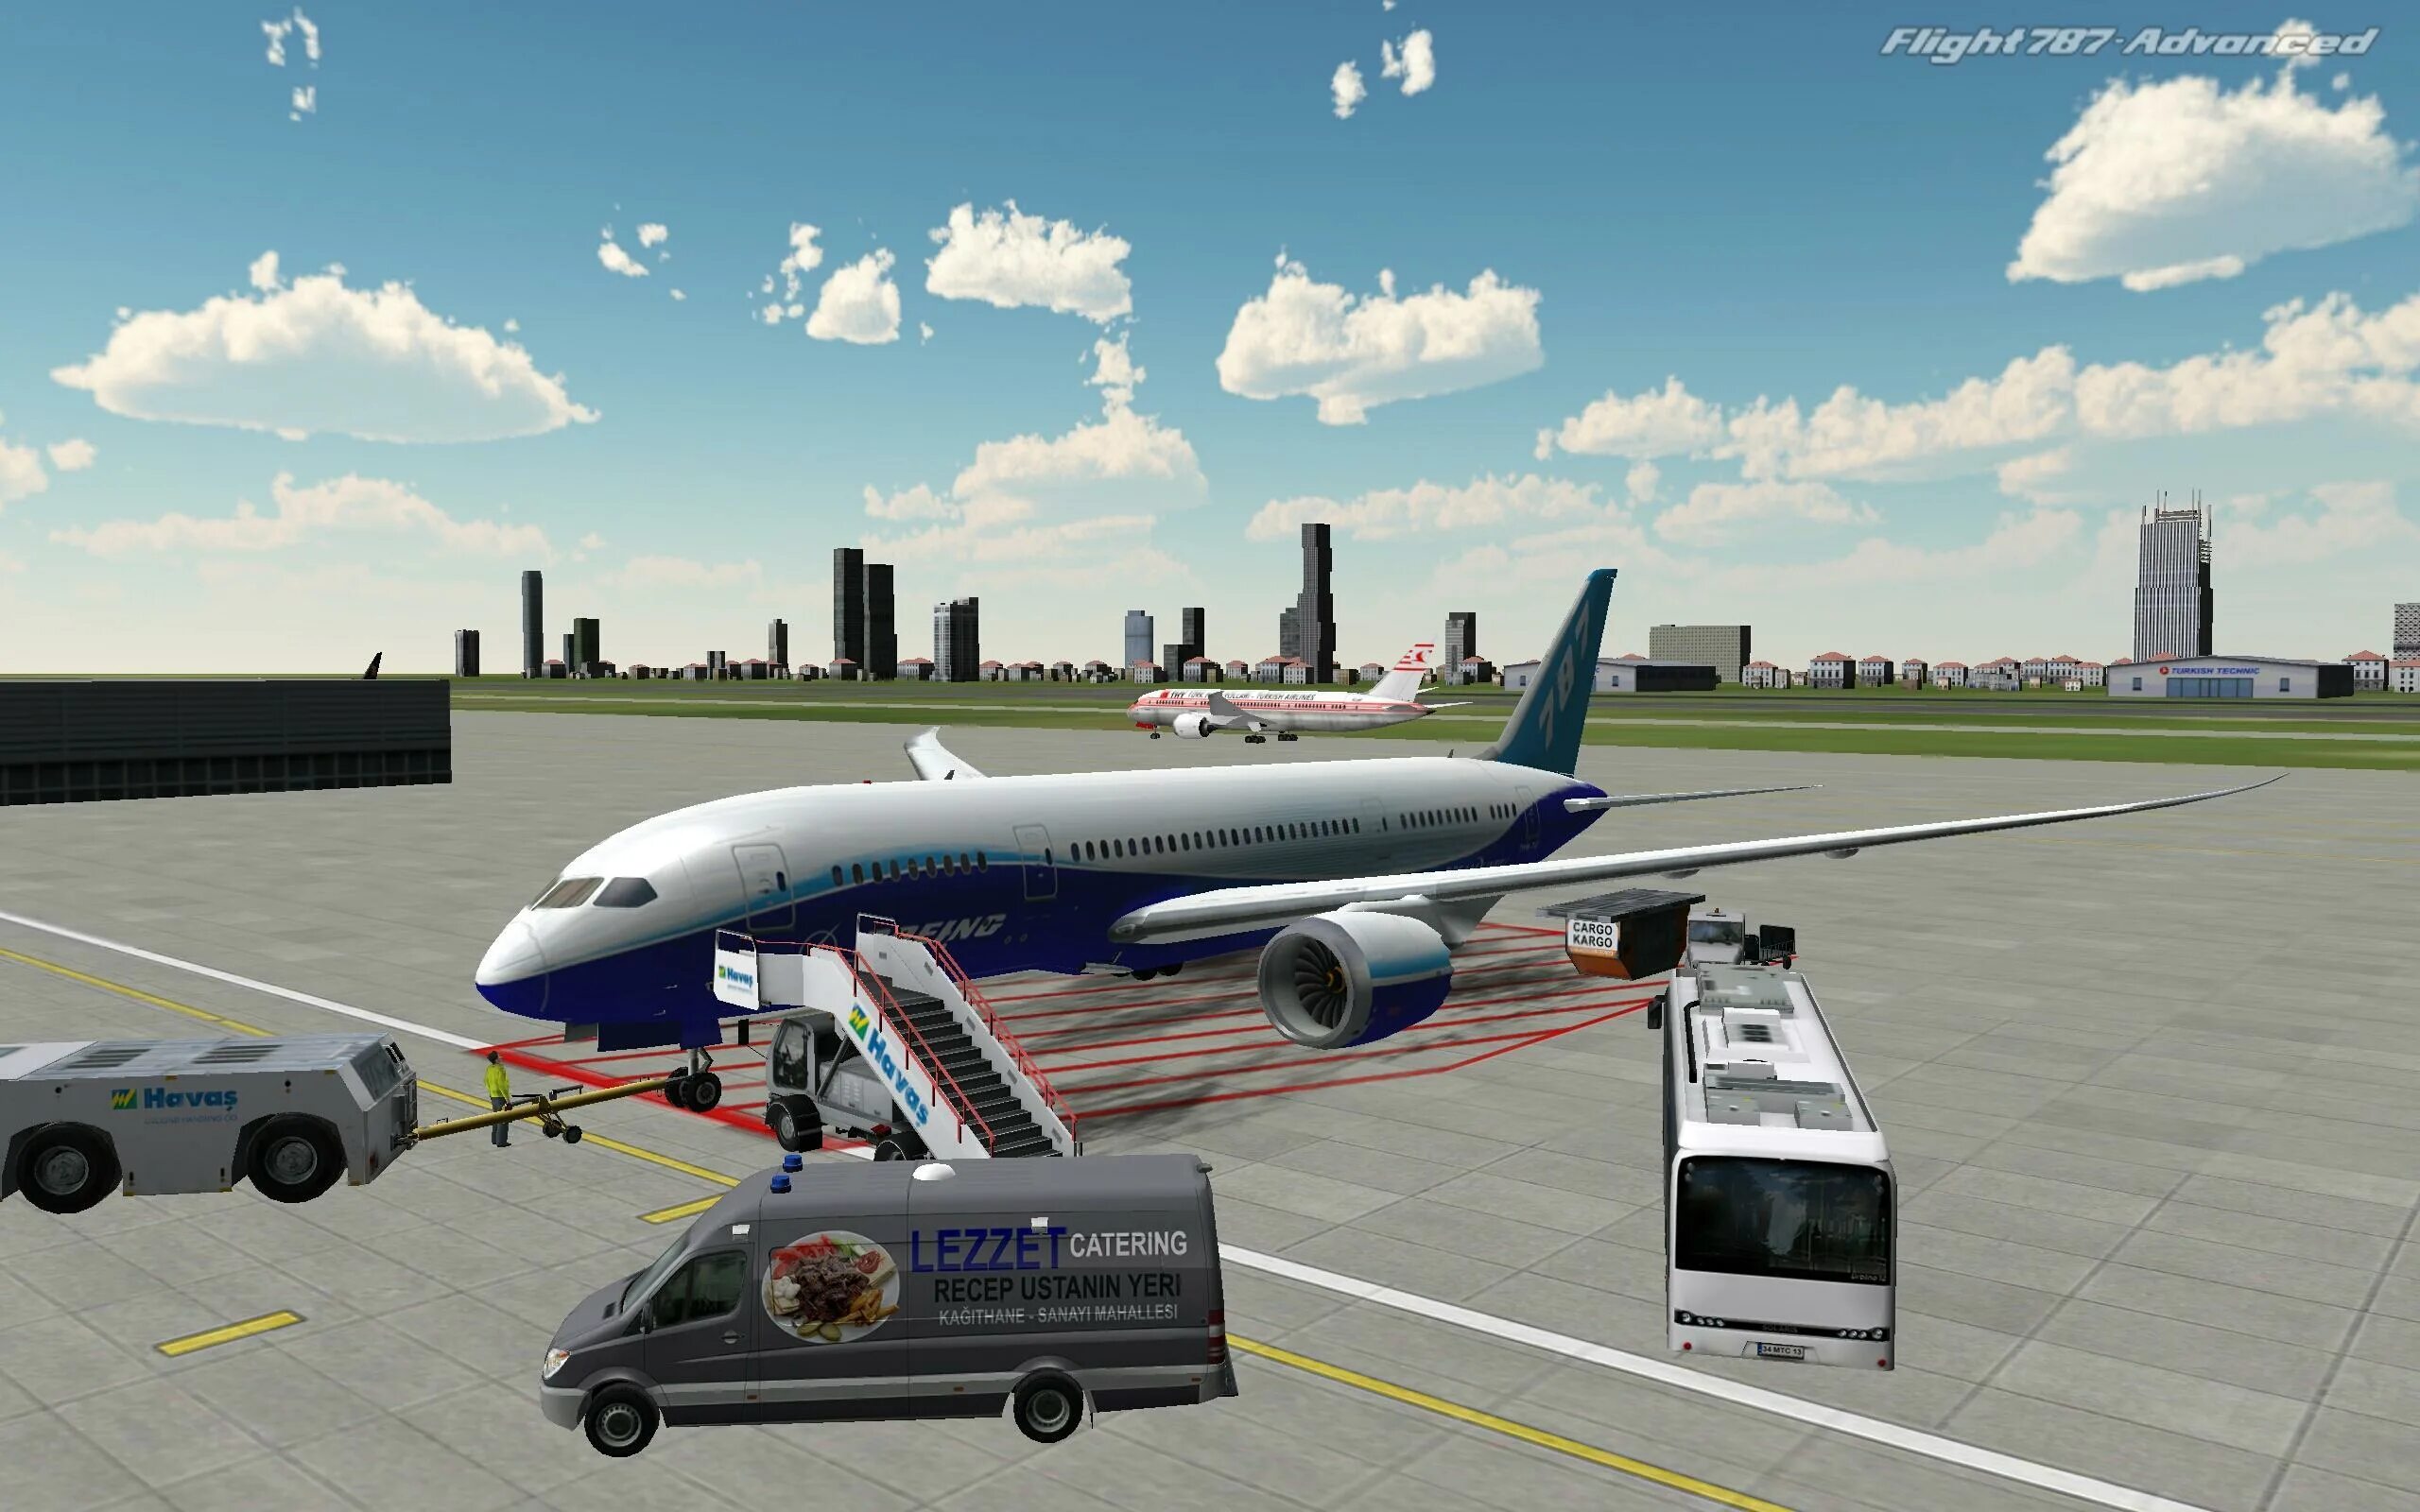 Flight 787 - Advanced. Реал Флайт симулятор. Авиасимулятор ВДНХ. Симулятор самолета пассажирского. Много игр про самолет